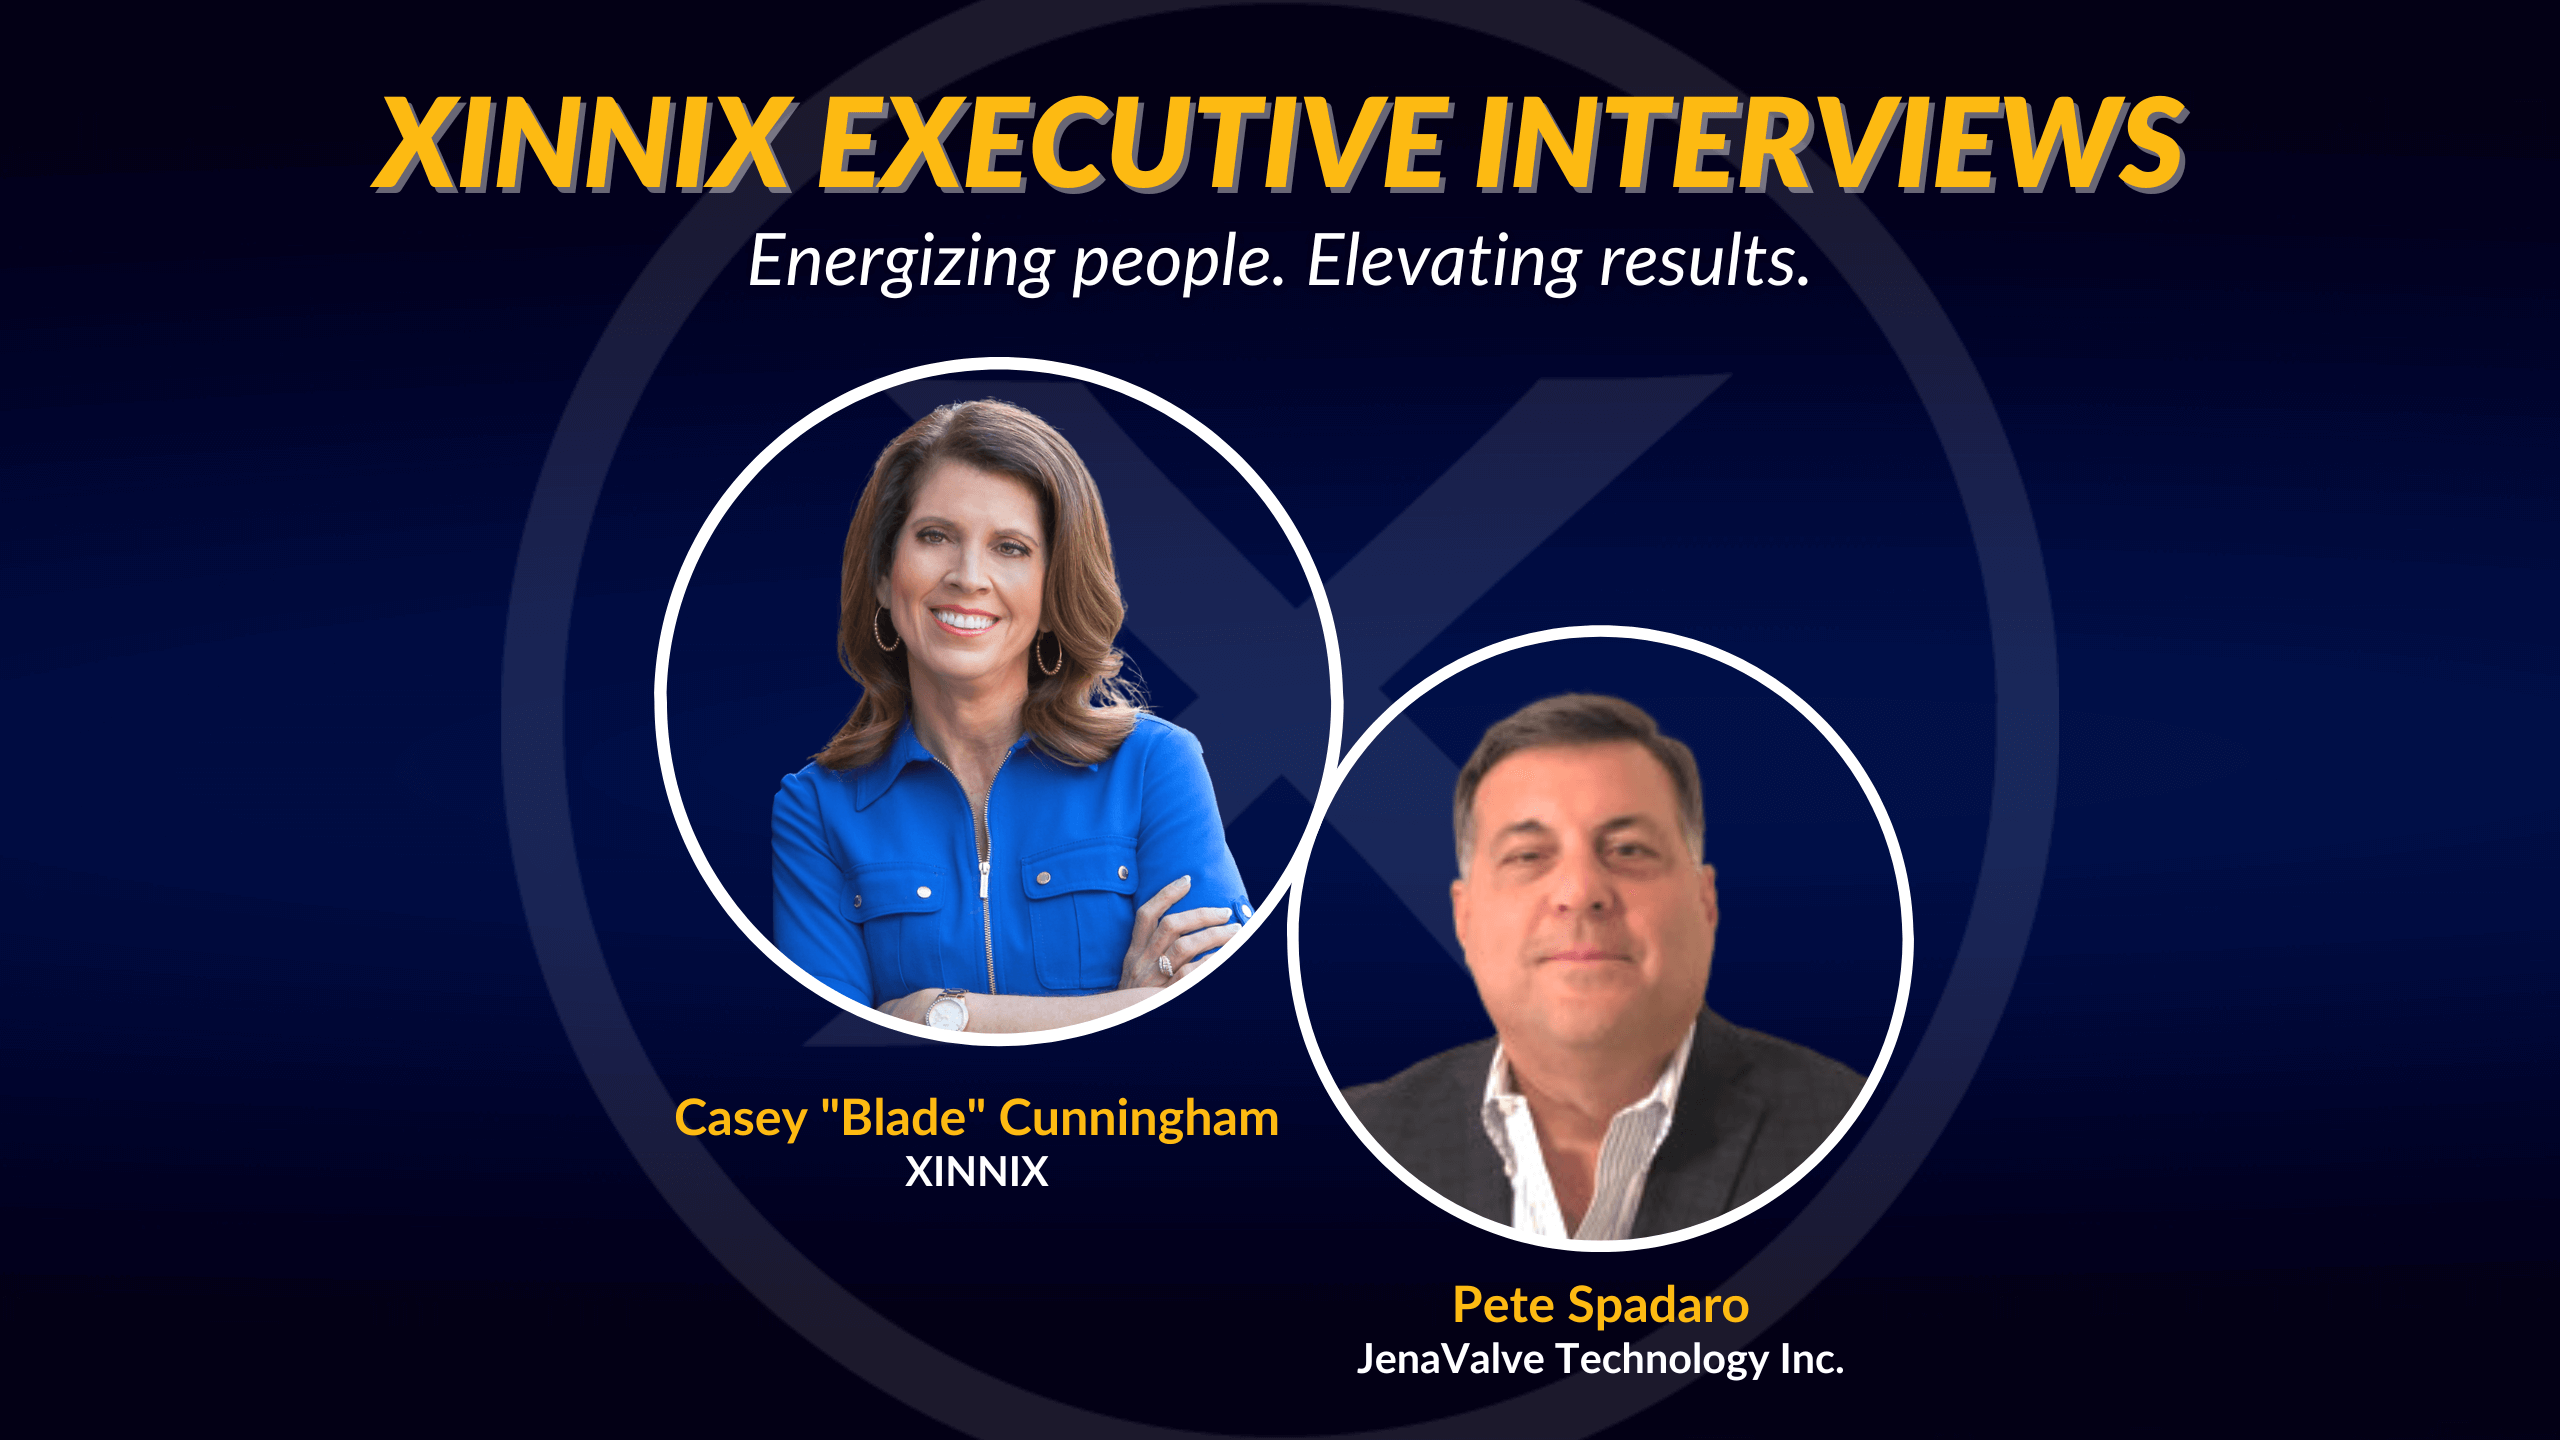 XINNIX Executive Interviews | Pete Spadaro, JenaValve Technology, Inc.